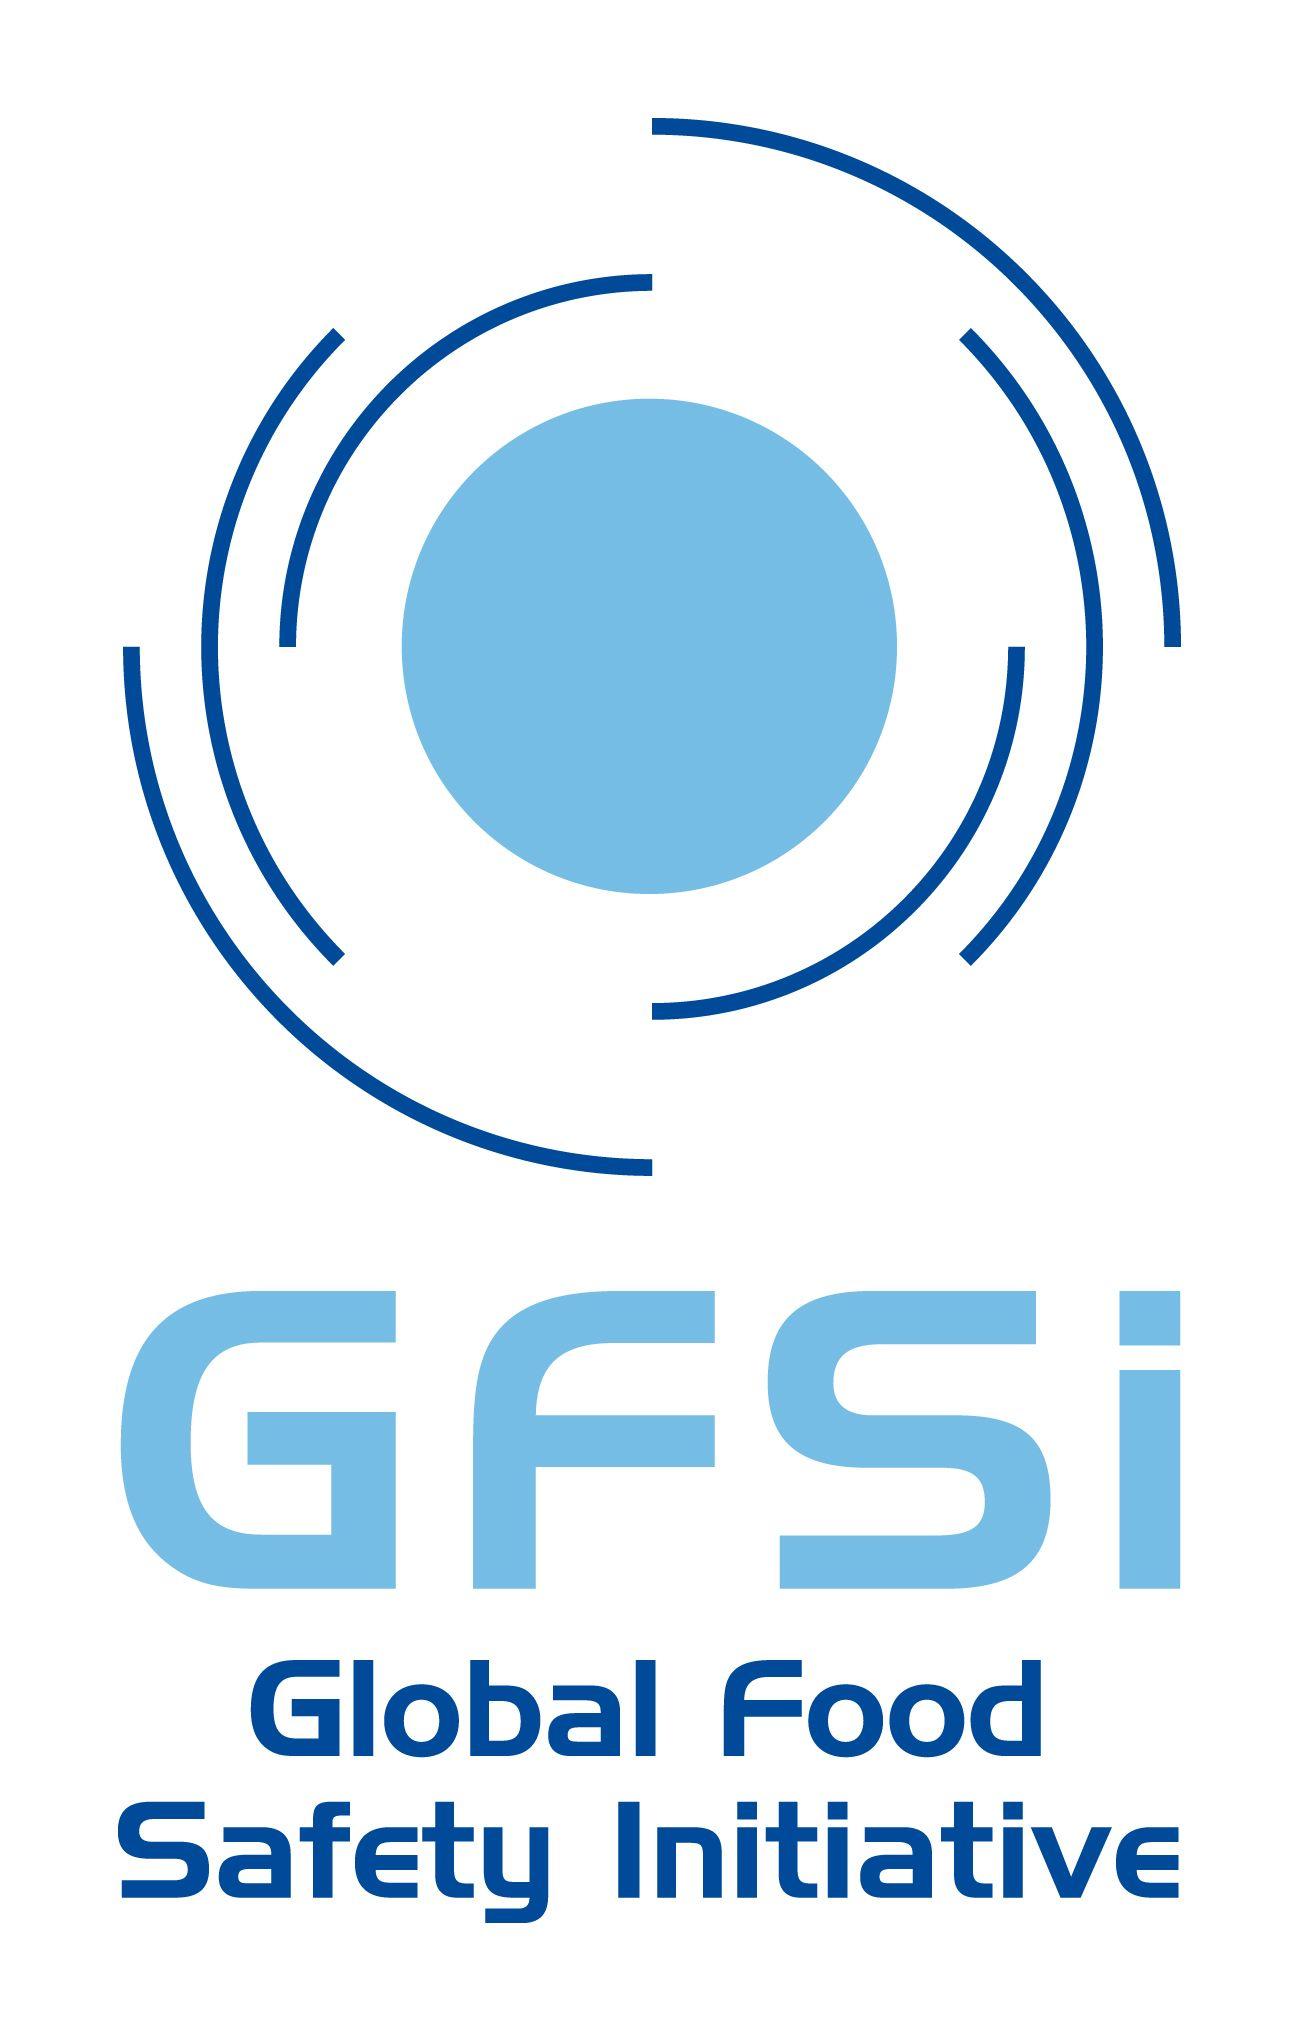 ASNT Logo - Image result for gfsi logo' | ASNT | Logos